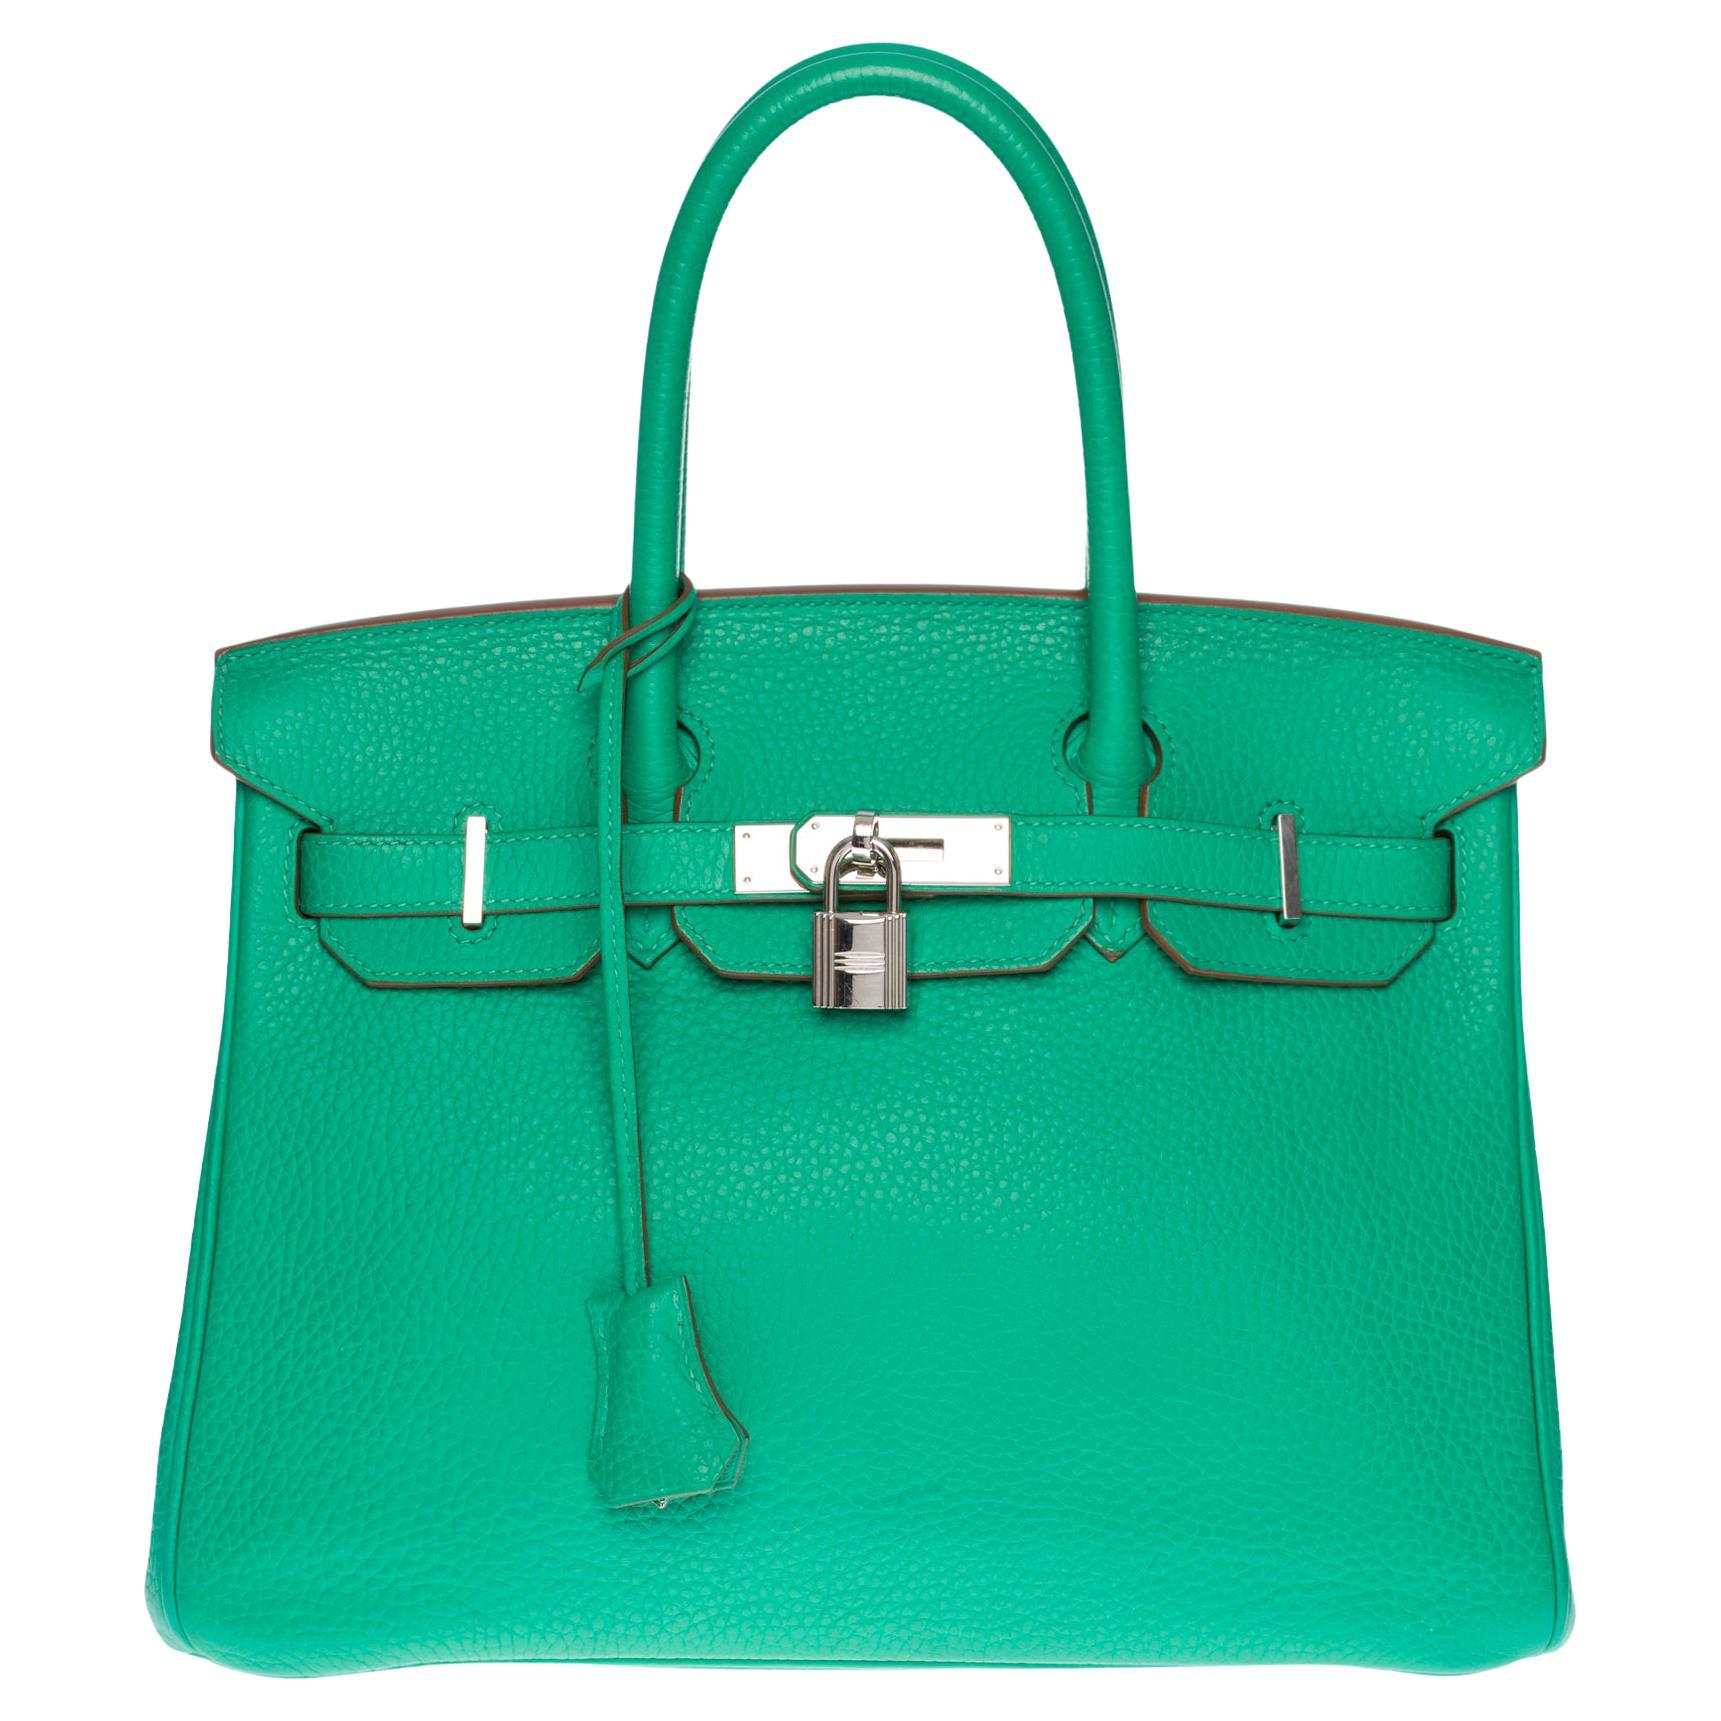 Bright Hermès Birkin 30 handbag in Vert Menthe Taurillon Clémence leather, SHW